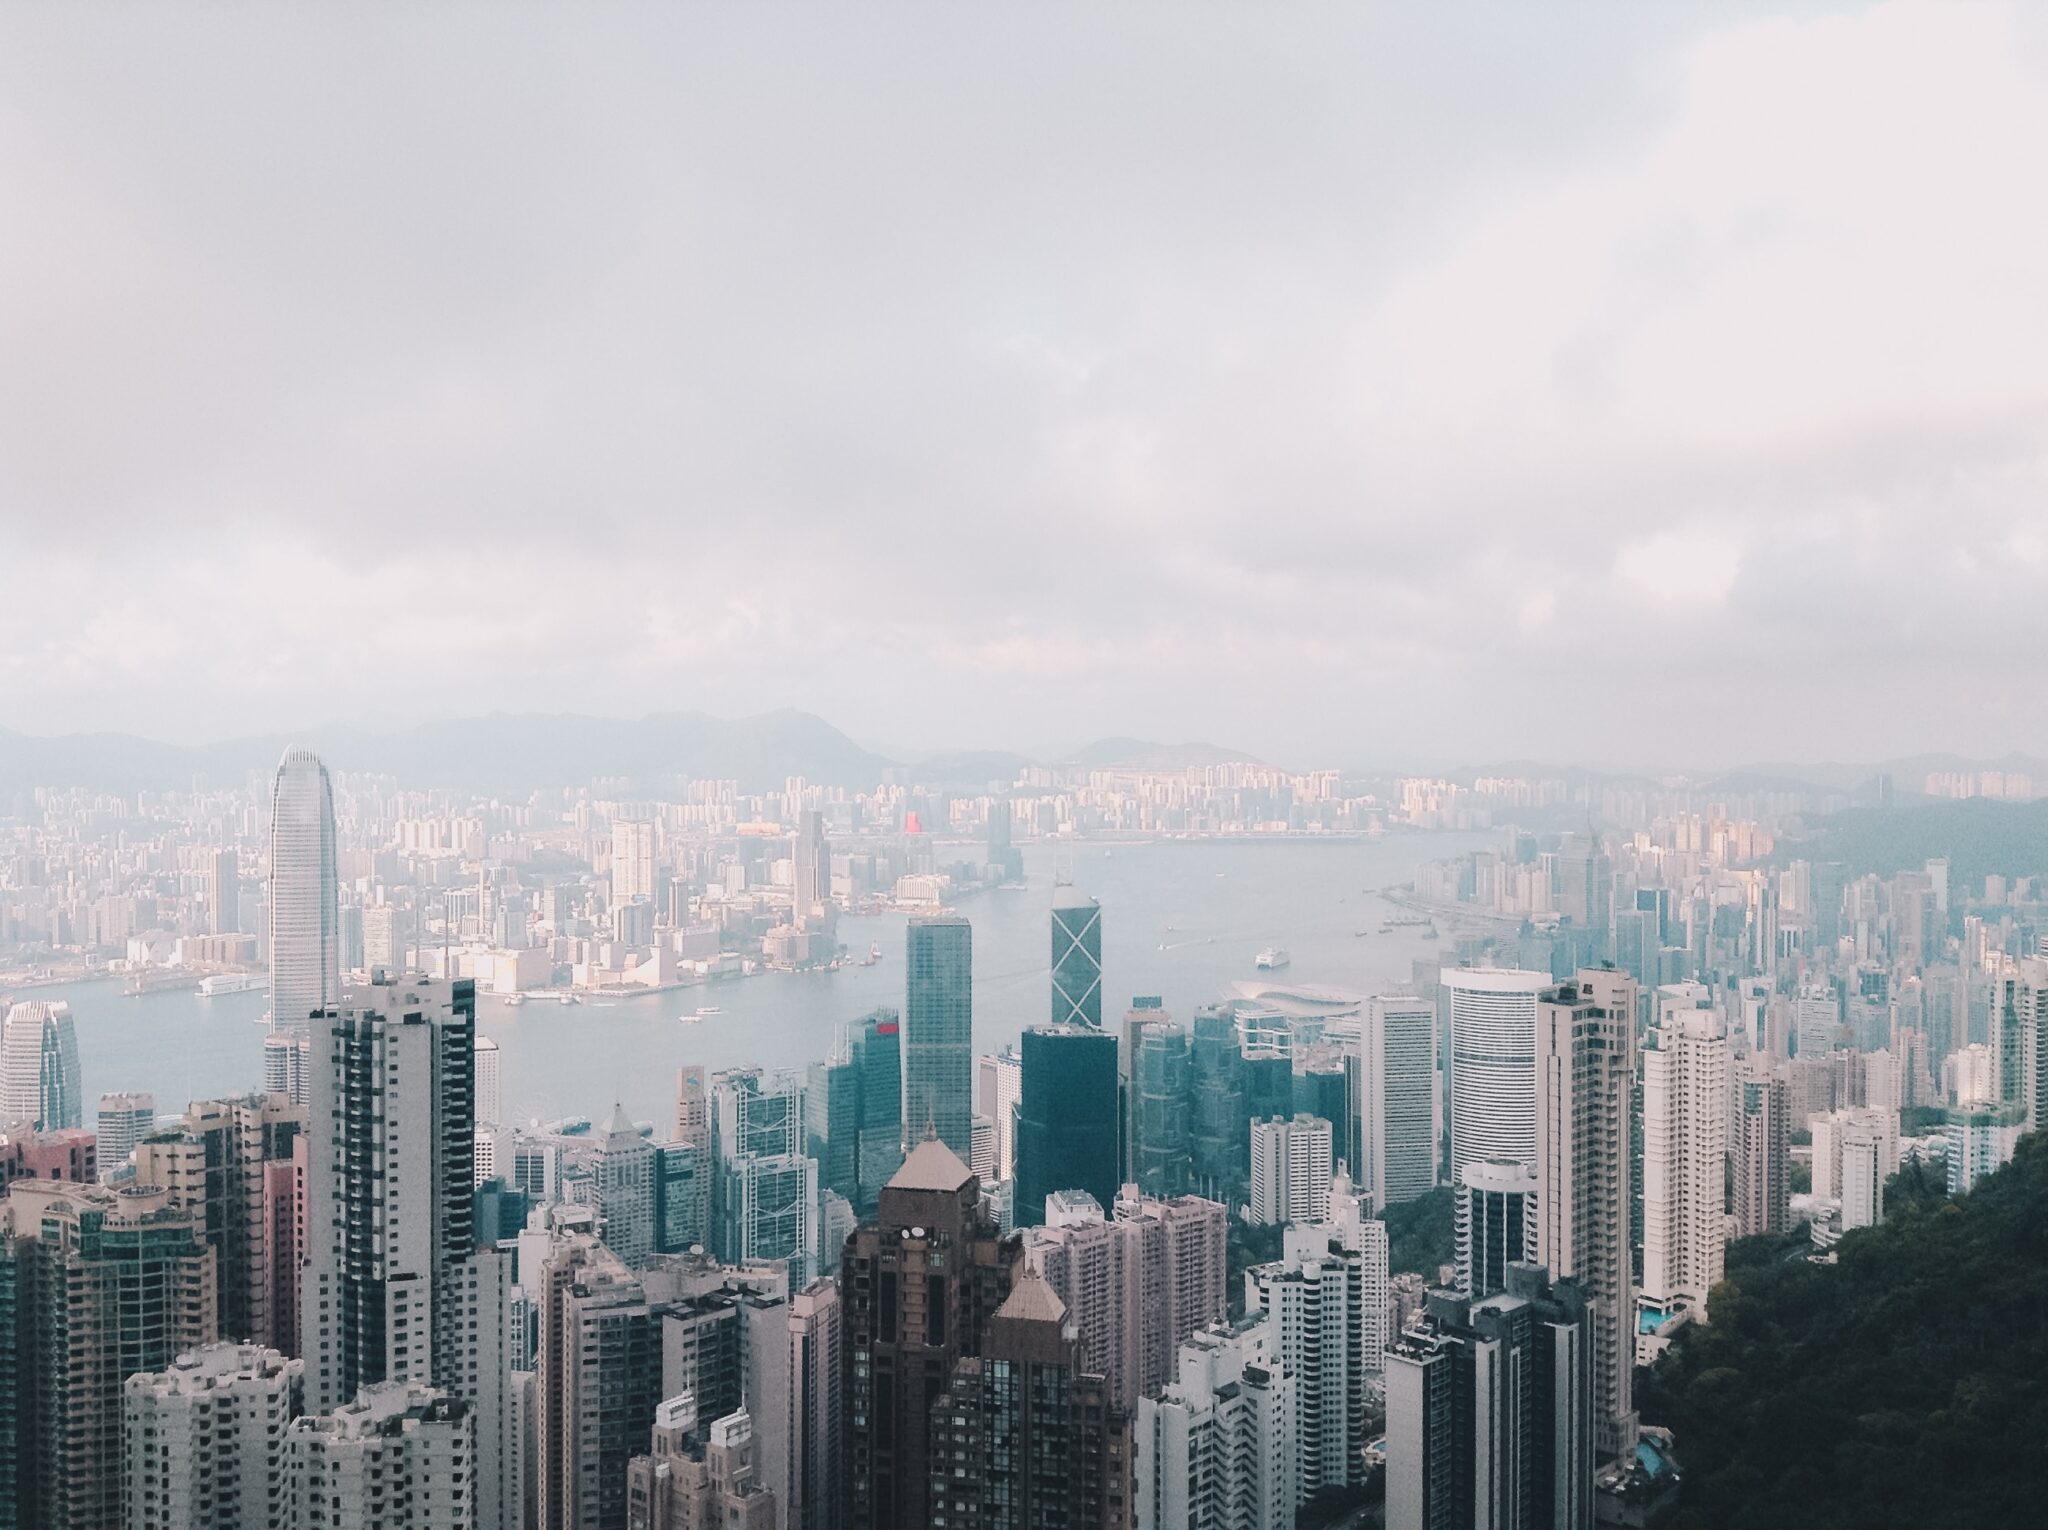 An aerial view of Hong Kong Source: Unsplash